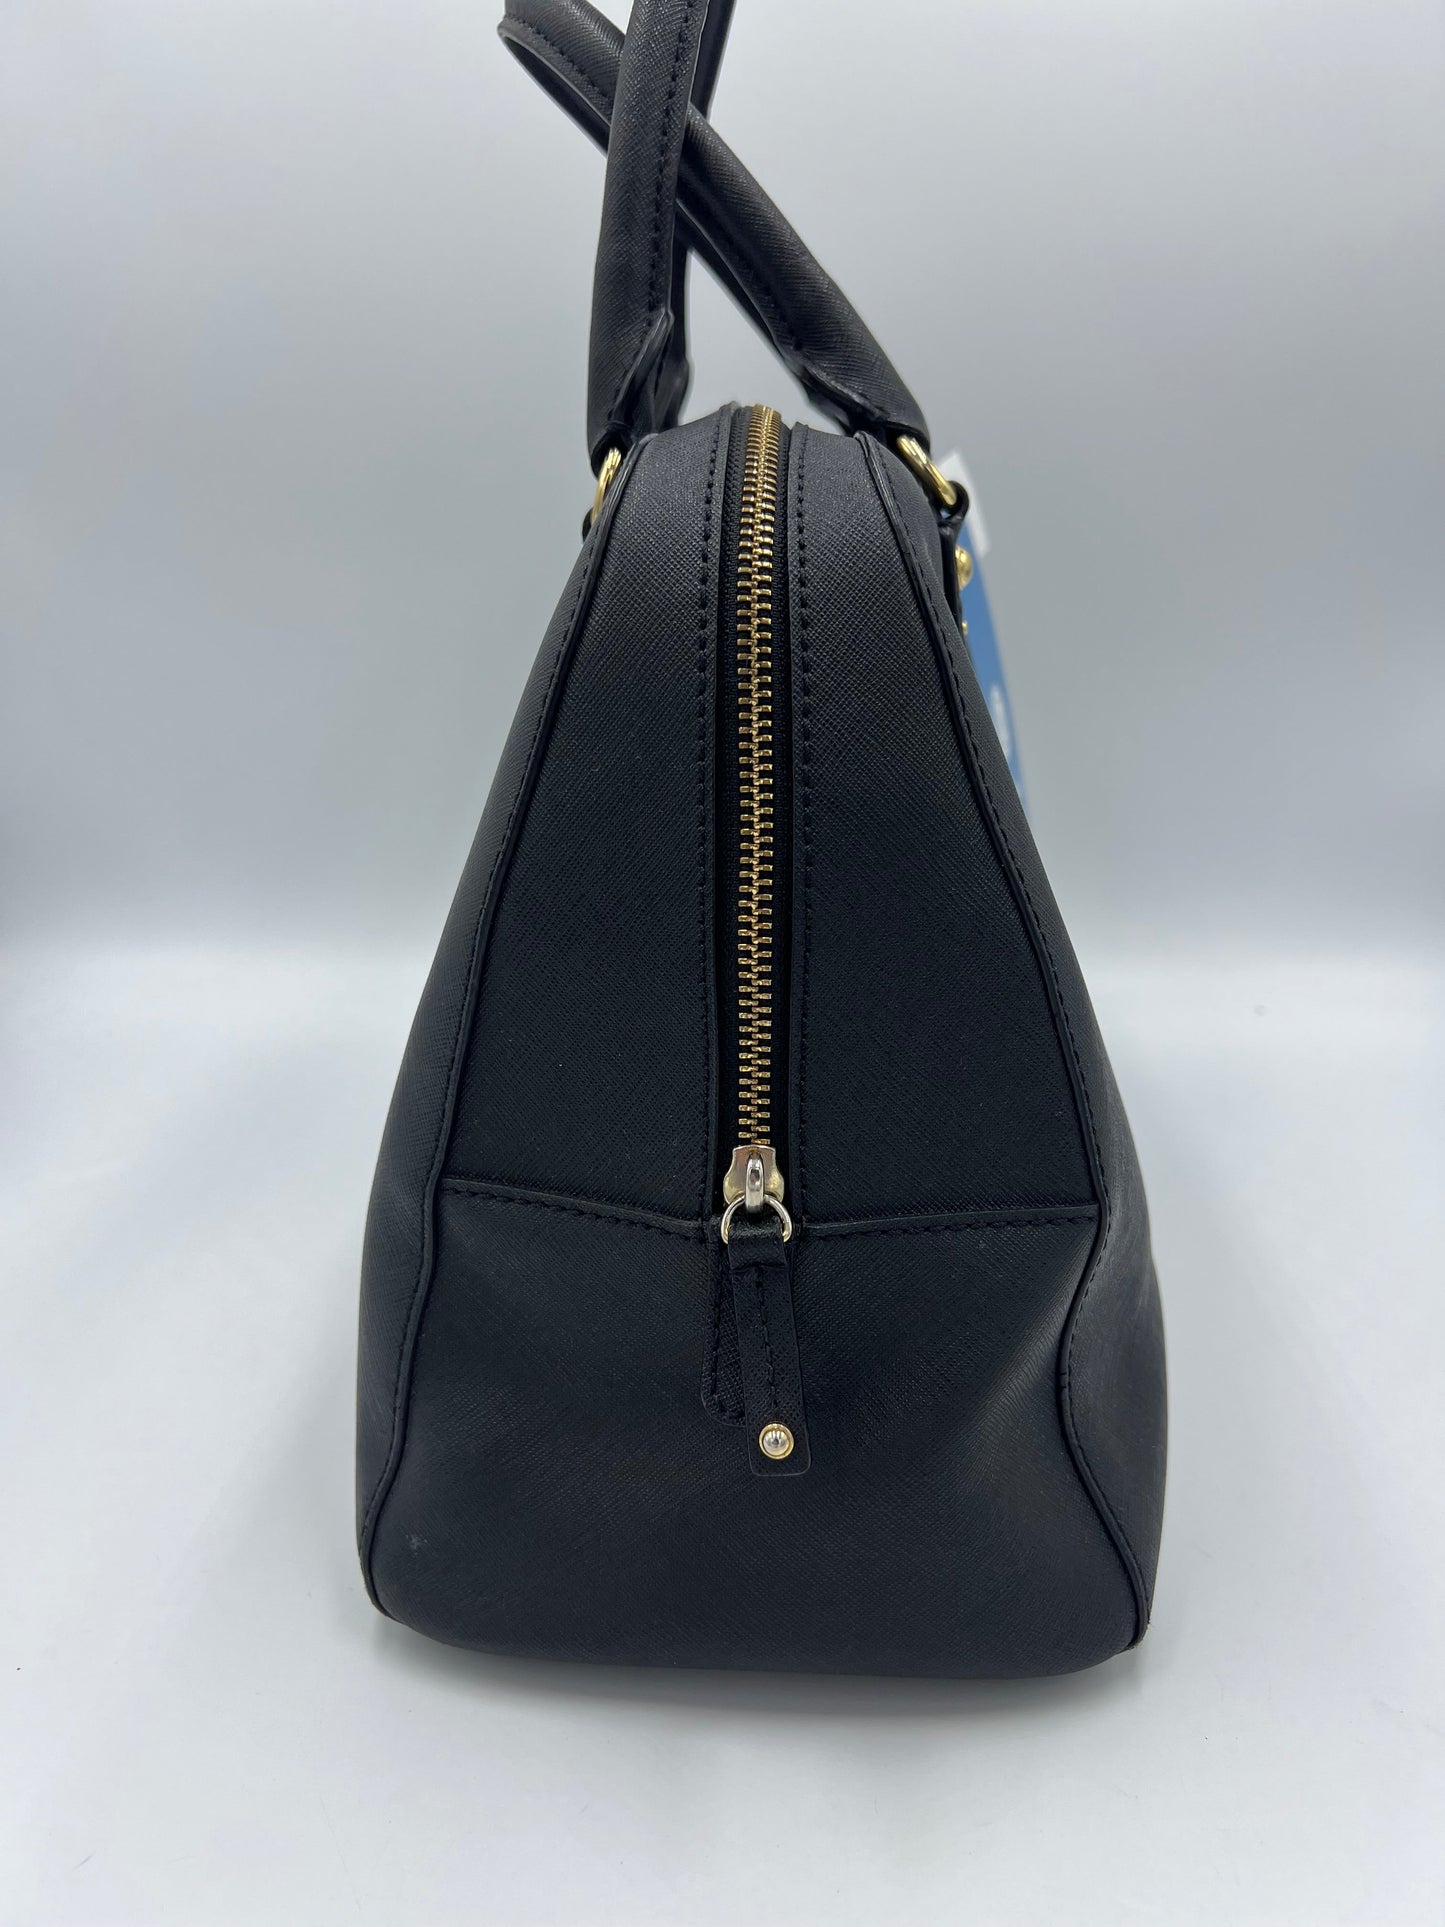 Black Handbag Designer Michael Kors